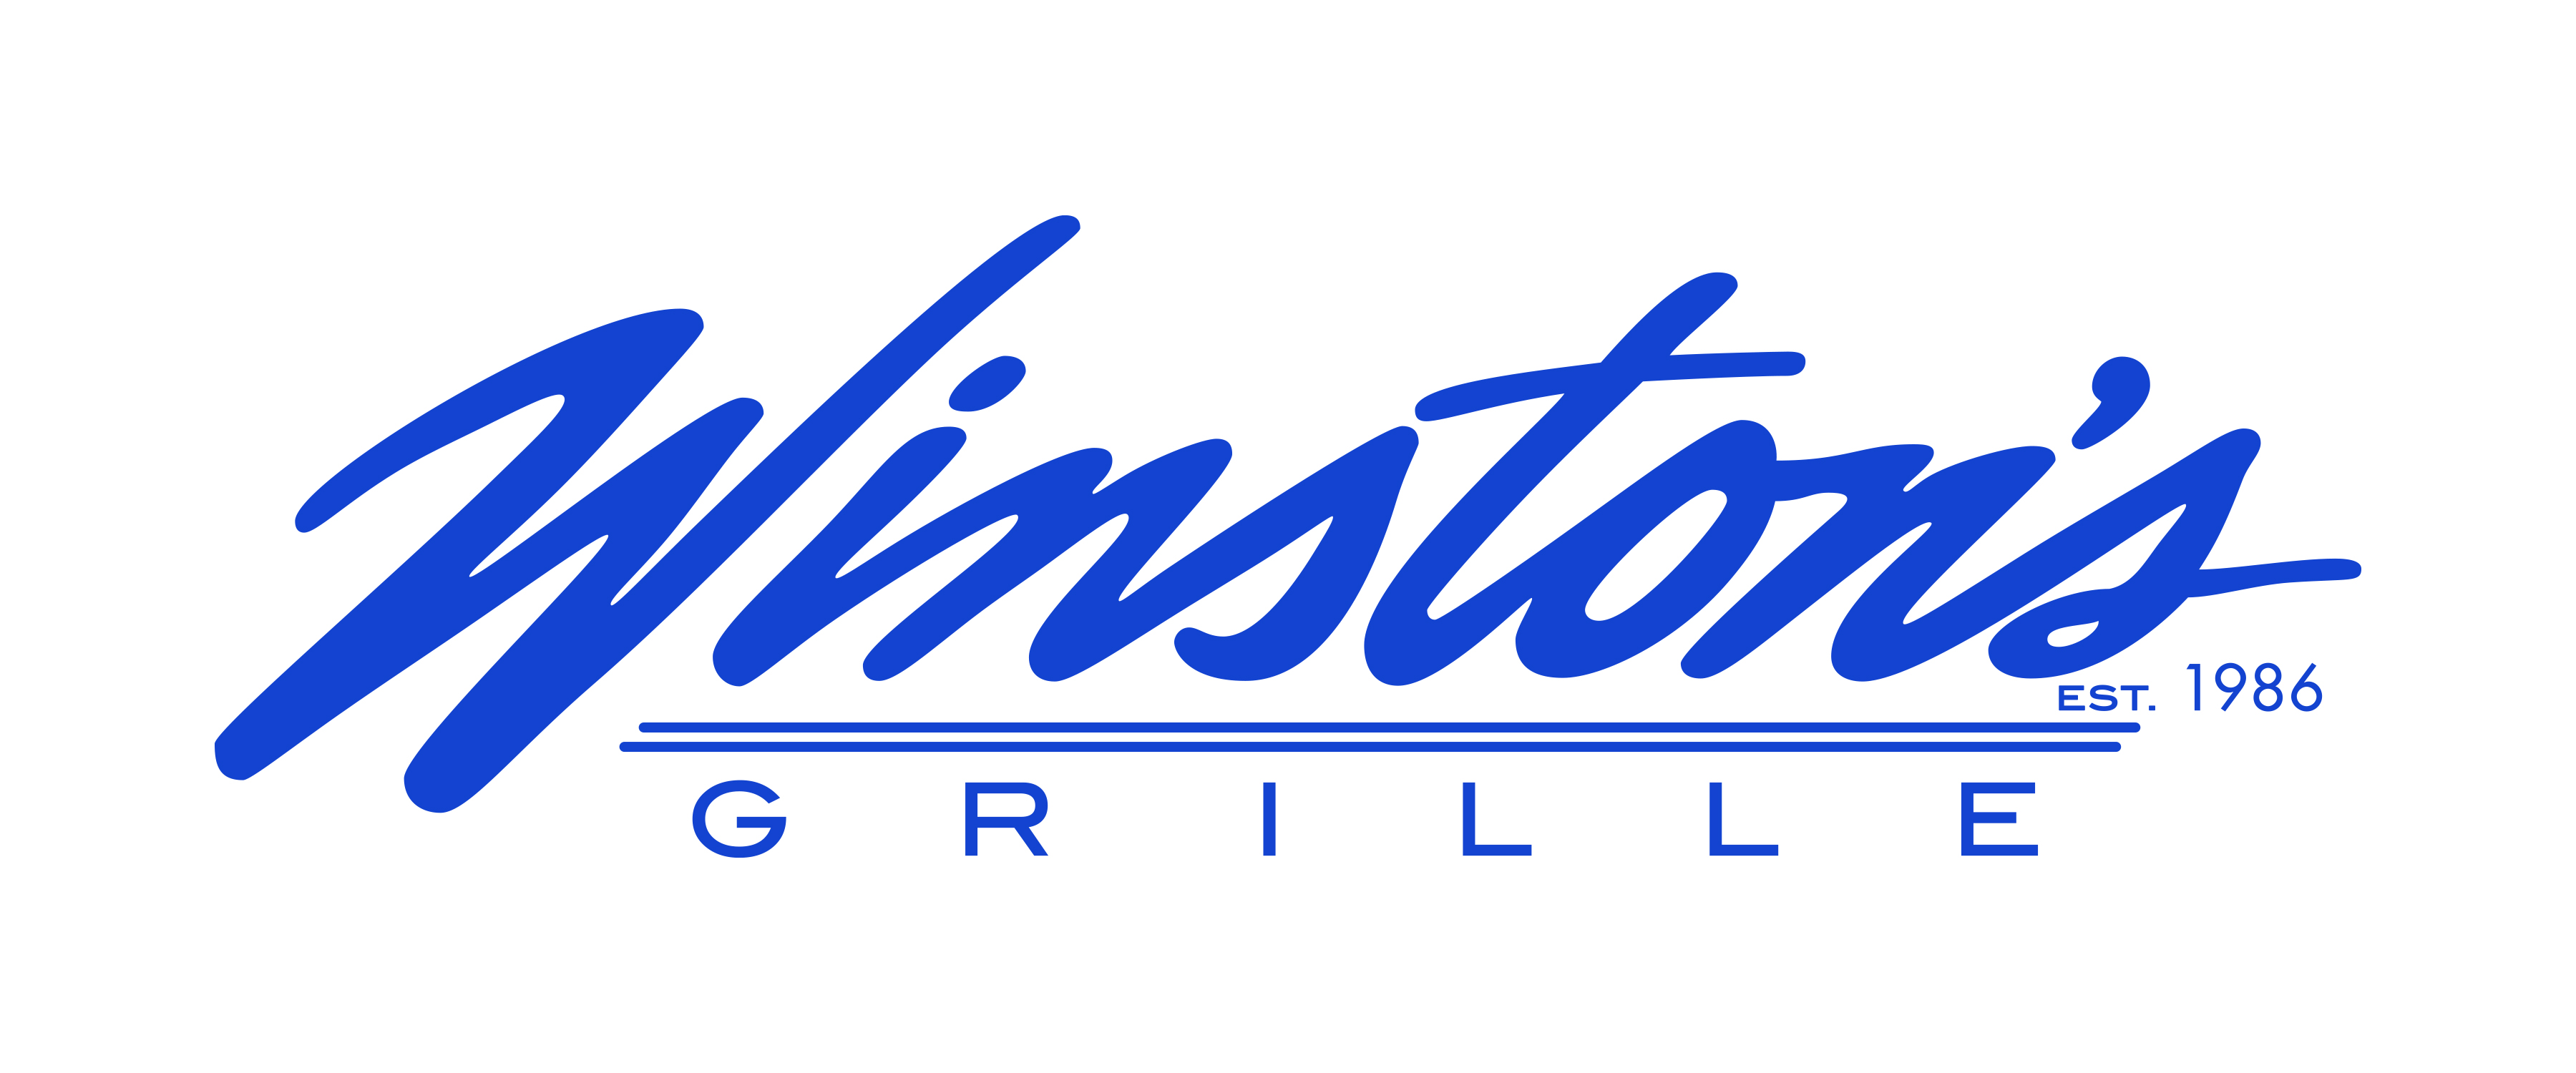 Sponsor Winston's Grille